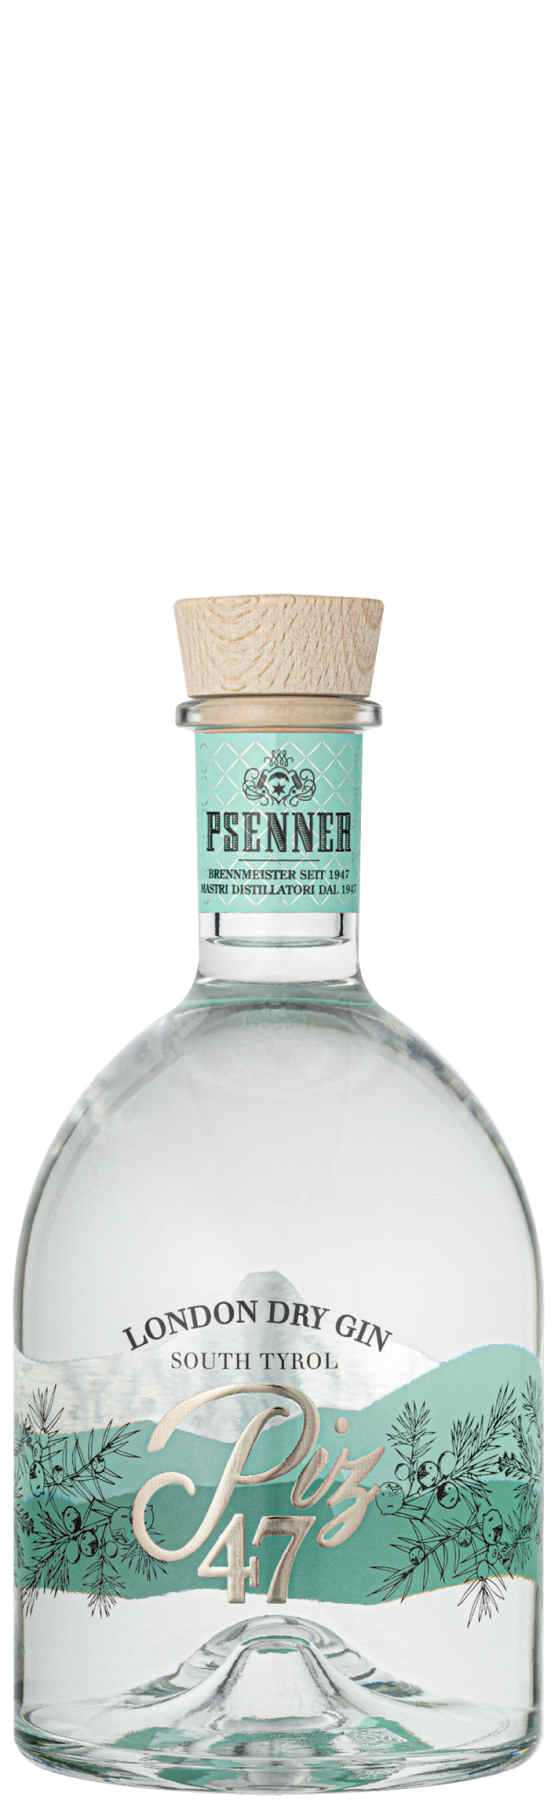 Psenner Piz 47 London Dry Gin 0,7L